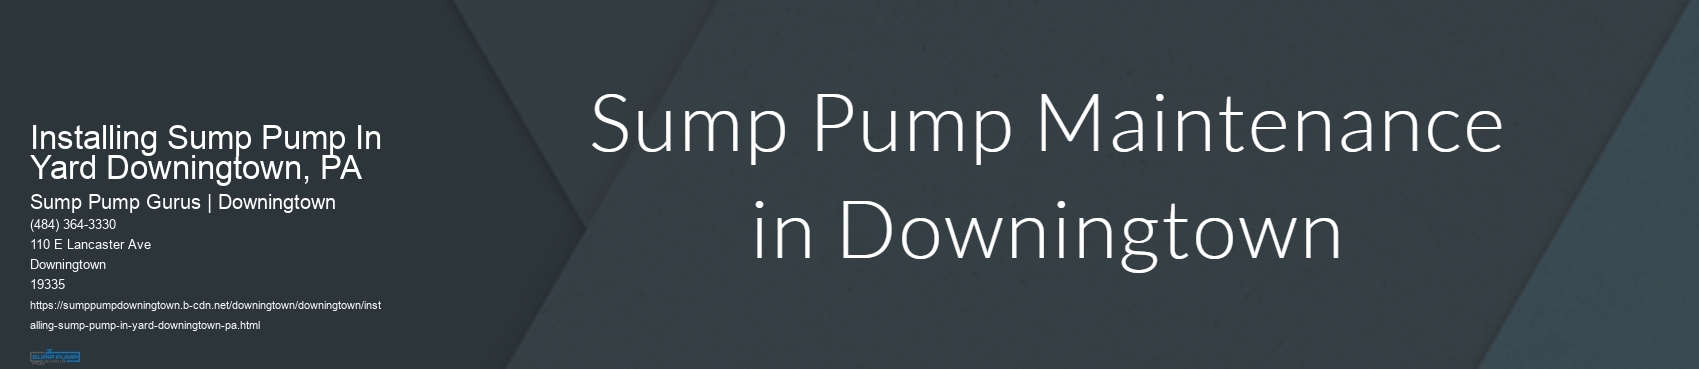 Installing Sump Pump In Yard Downingtown, PA